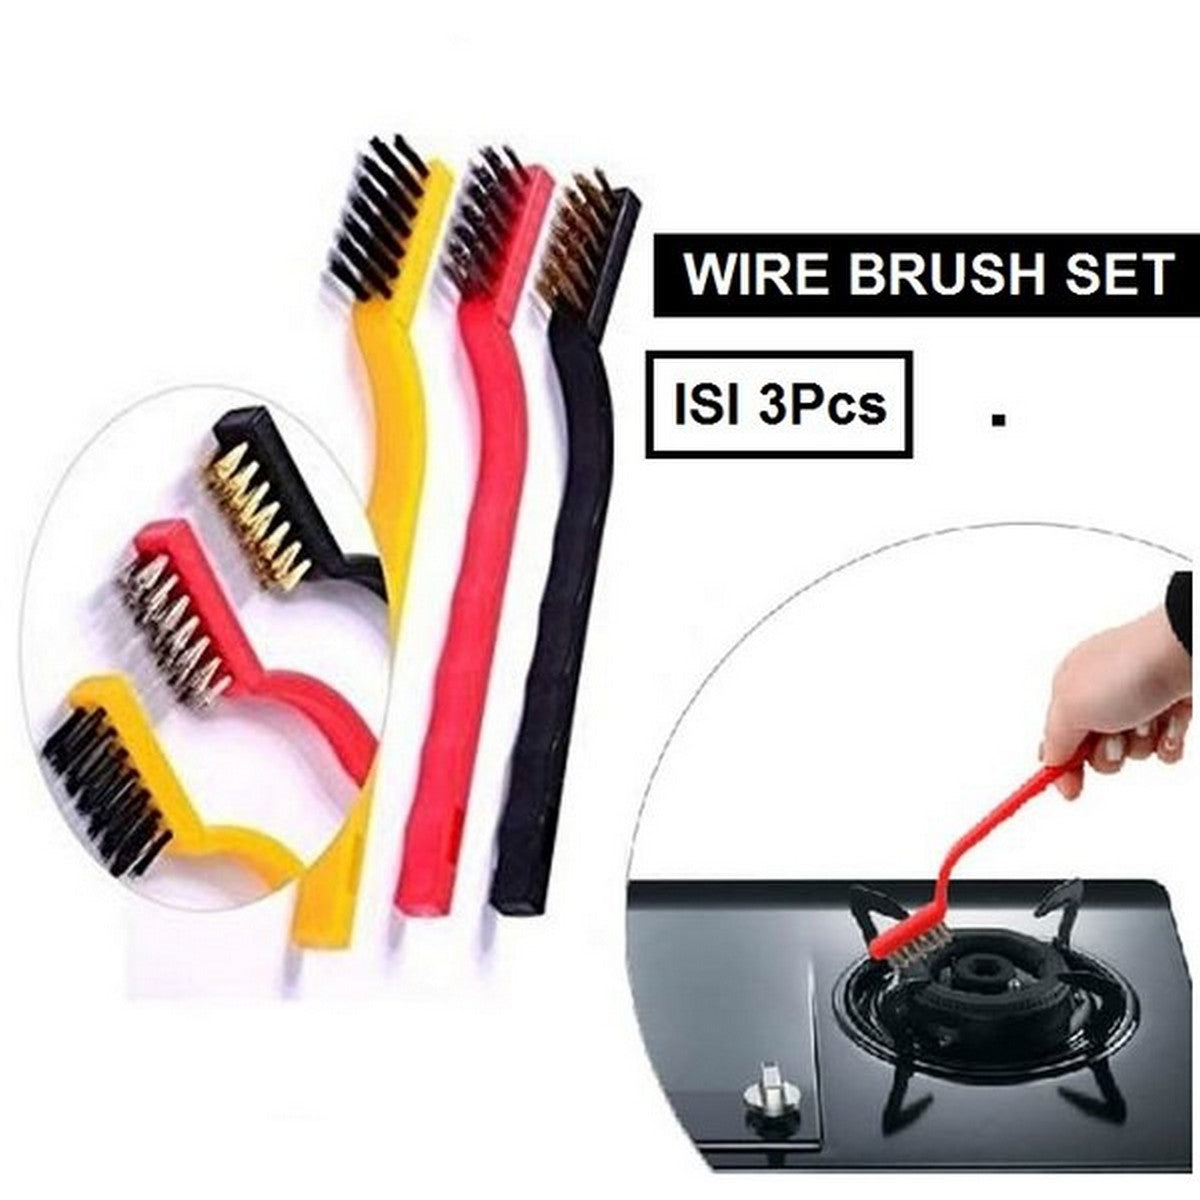 Pack of 3 Mini Wire Brush Set (Brass, Nylon, Stainless Steel Bristles)